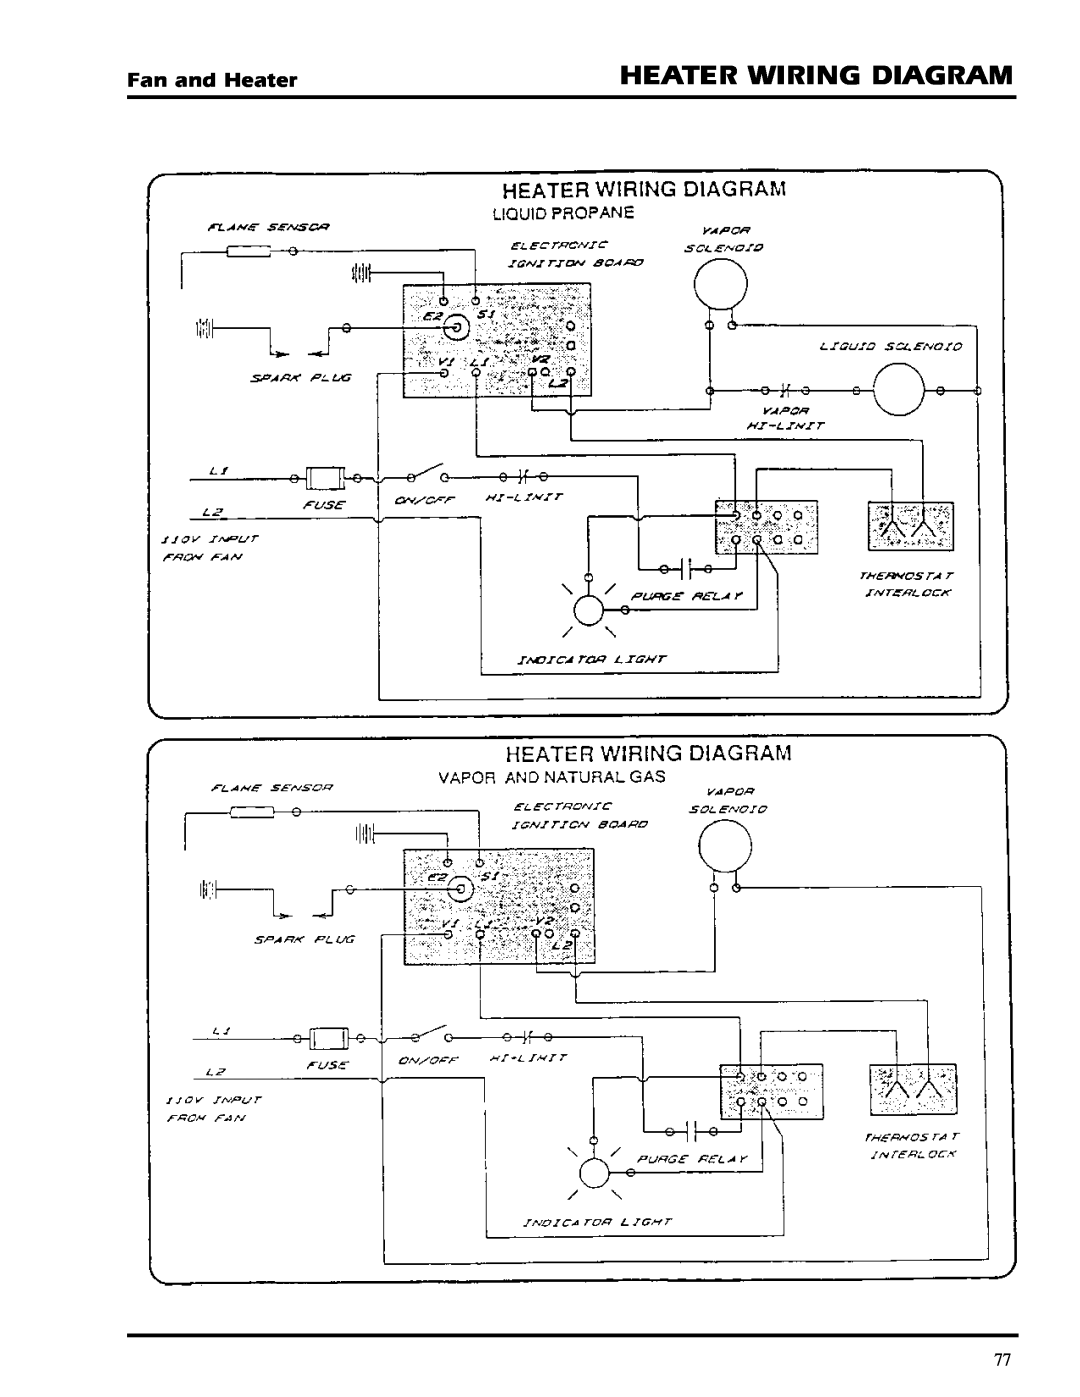 GSI Outdoors PNEG-377 service manual Heater Wiring Diagram, Fan and Heater 